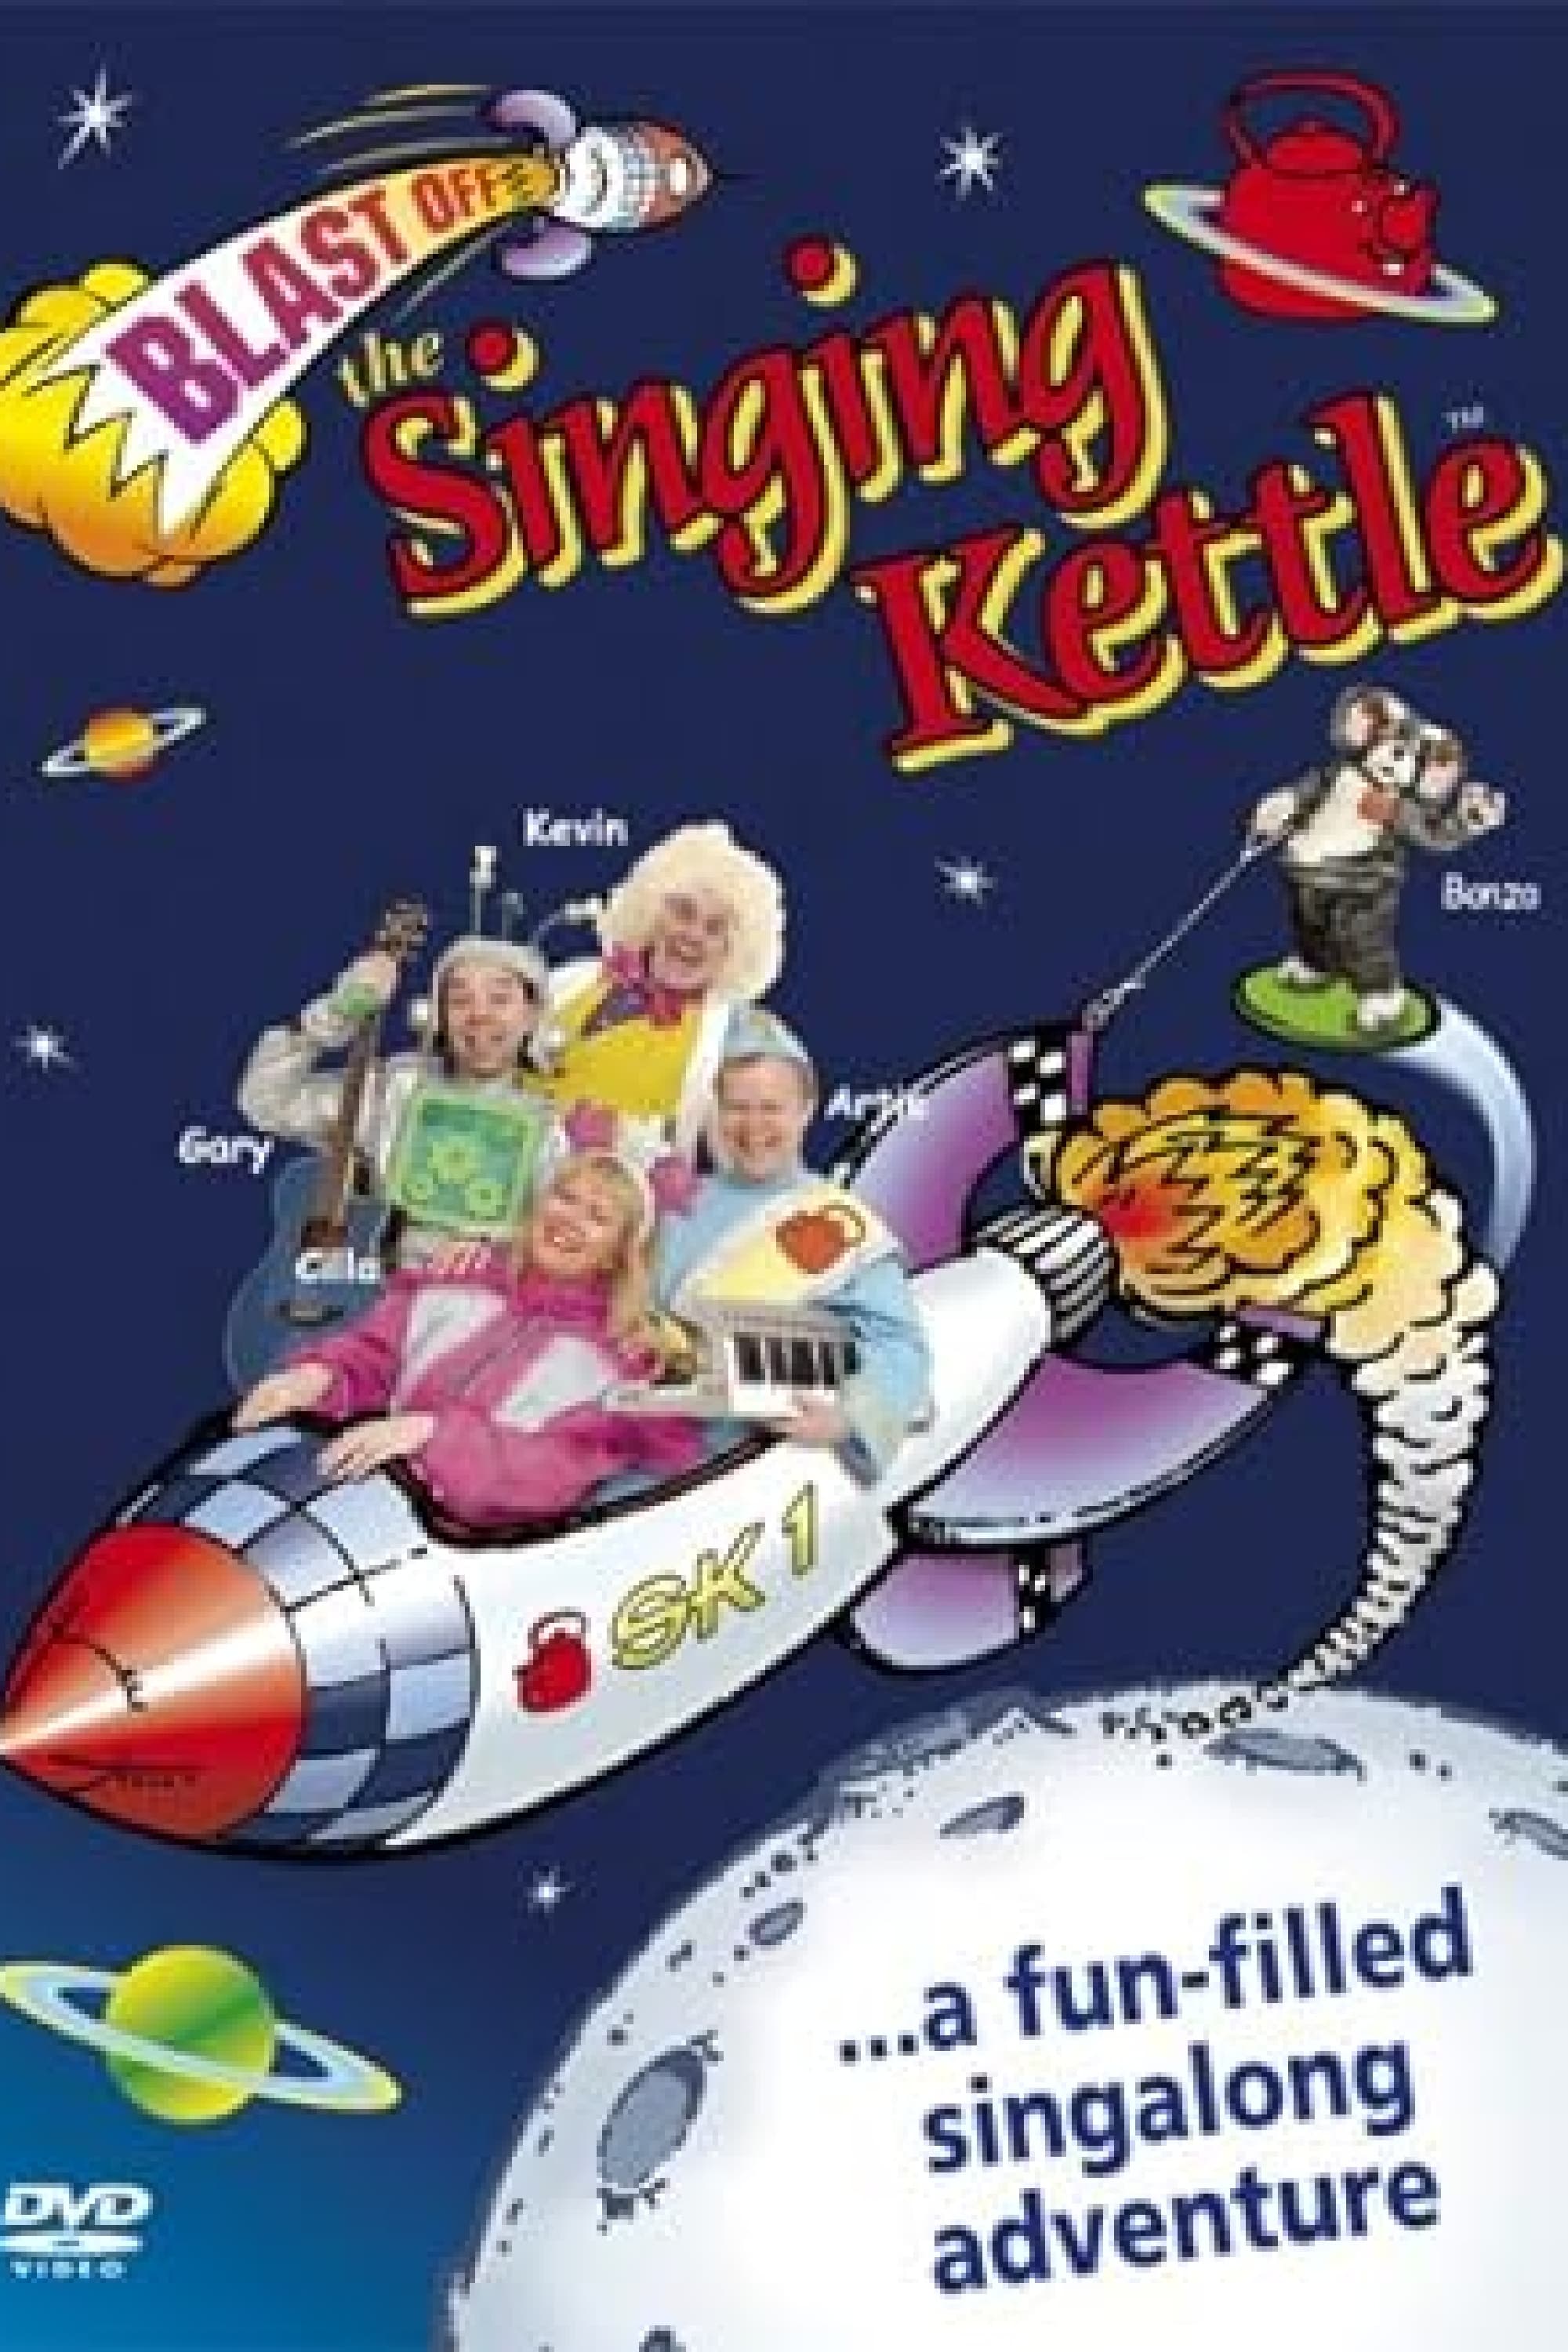 Blast Off: The Singing Kettle